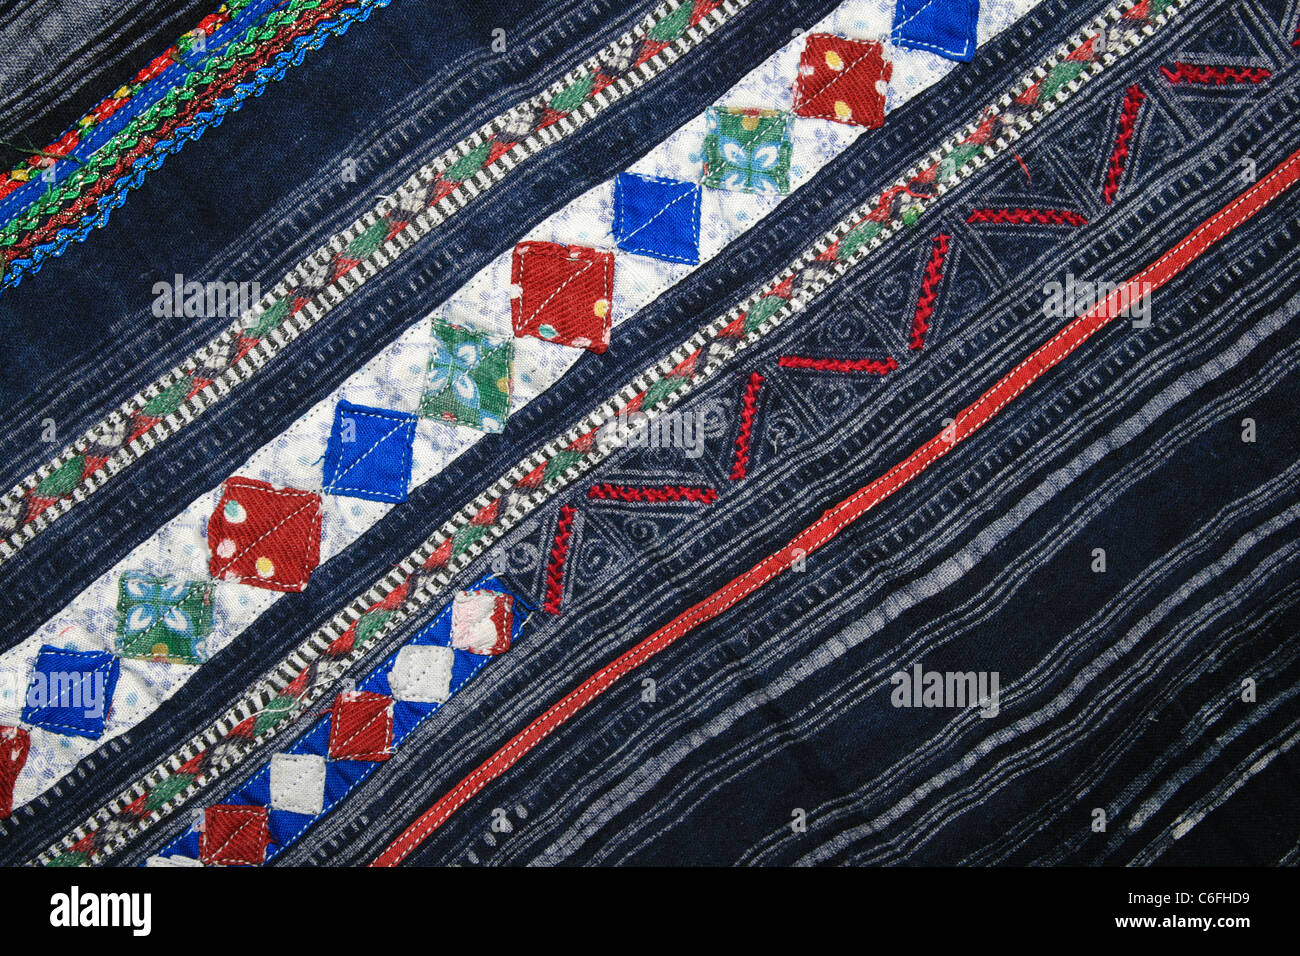 indigo died blue batik cloth design background texture with applique Stock Photo